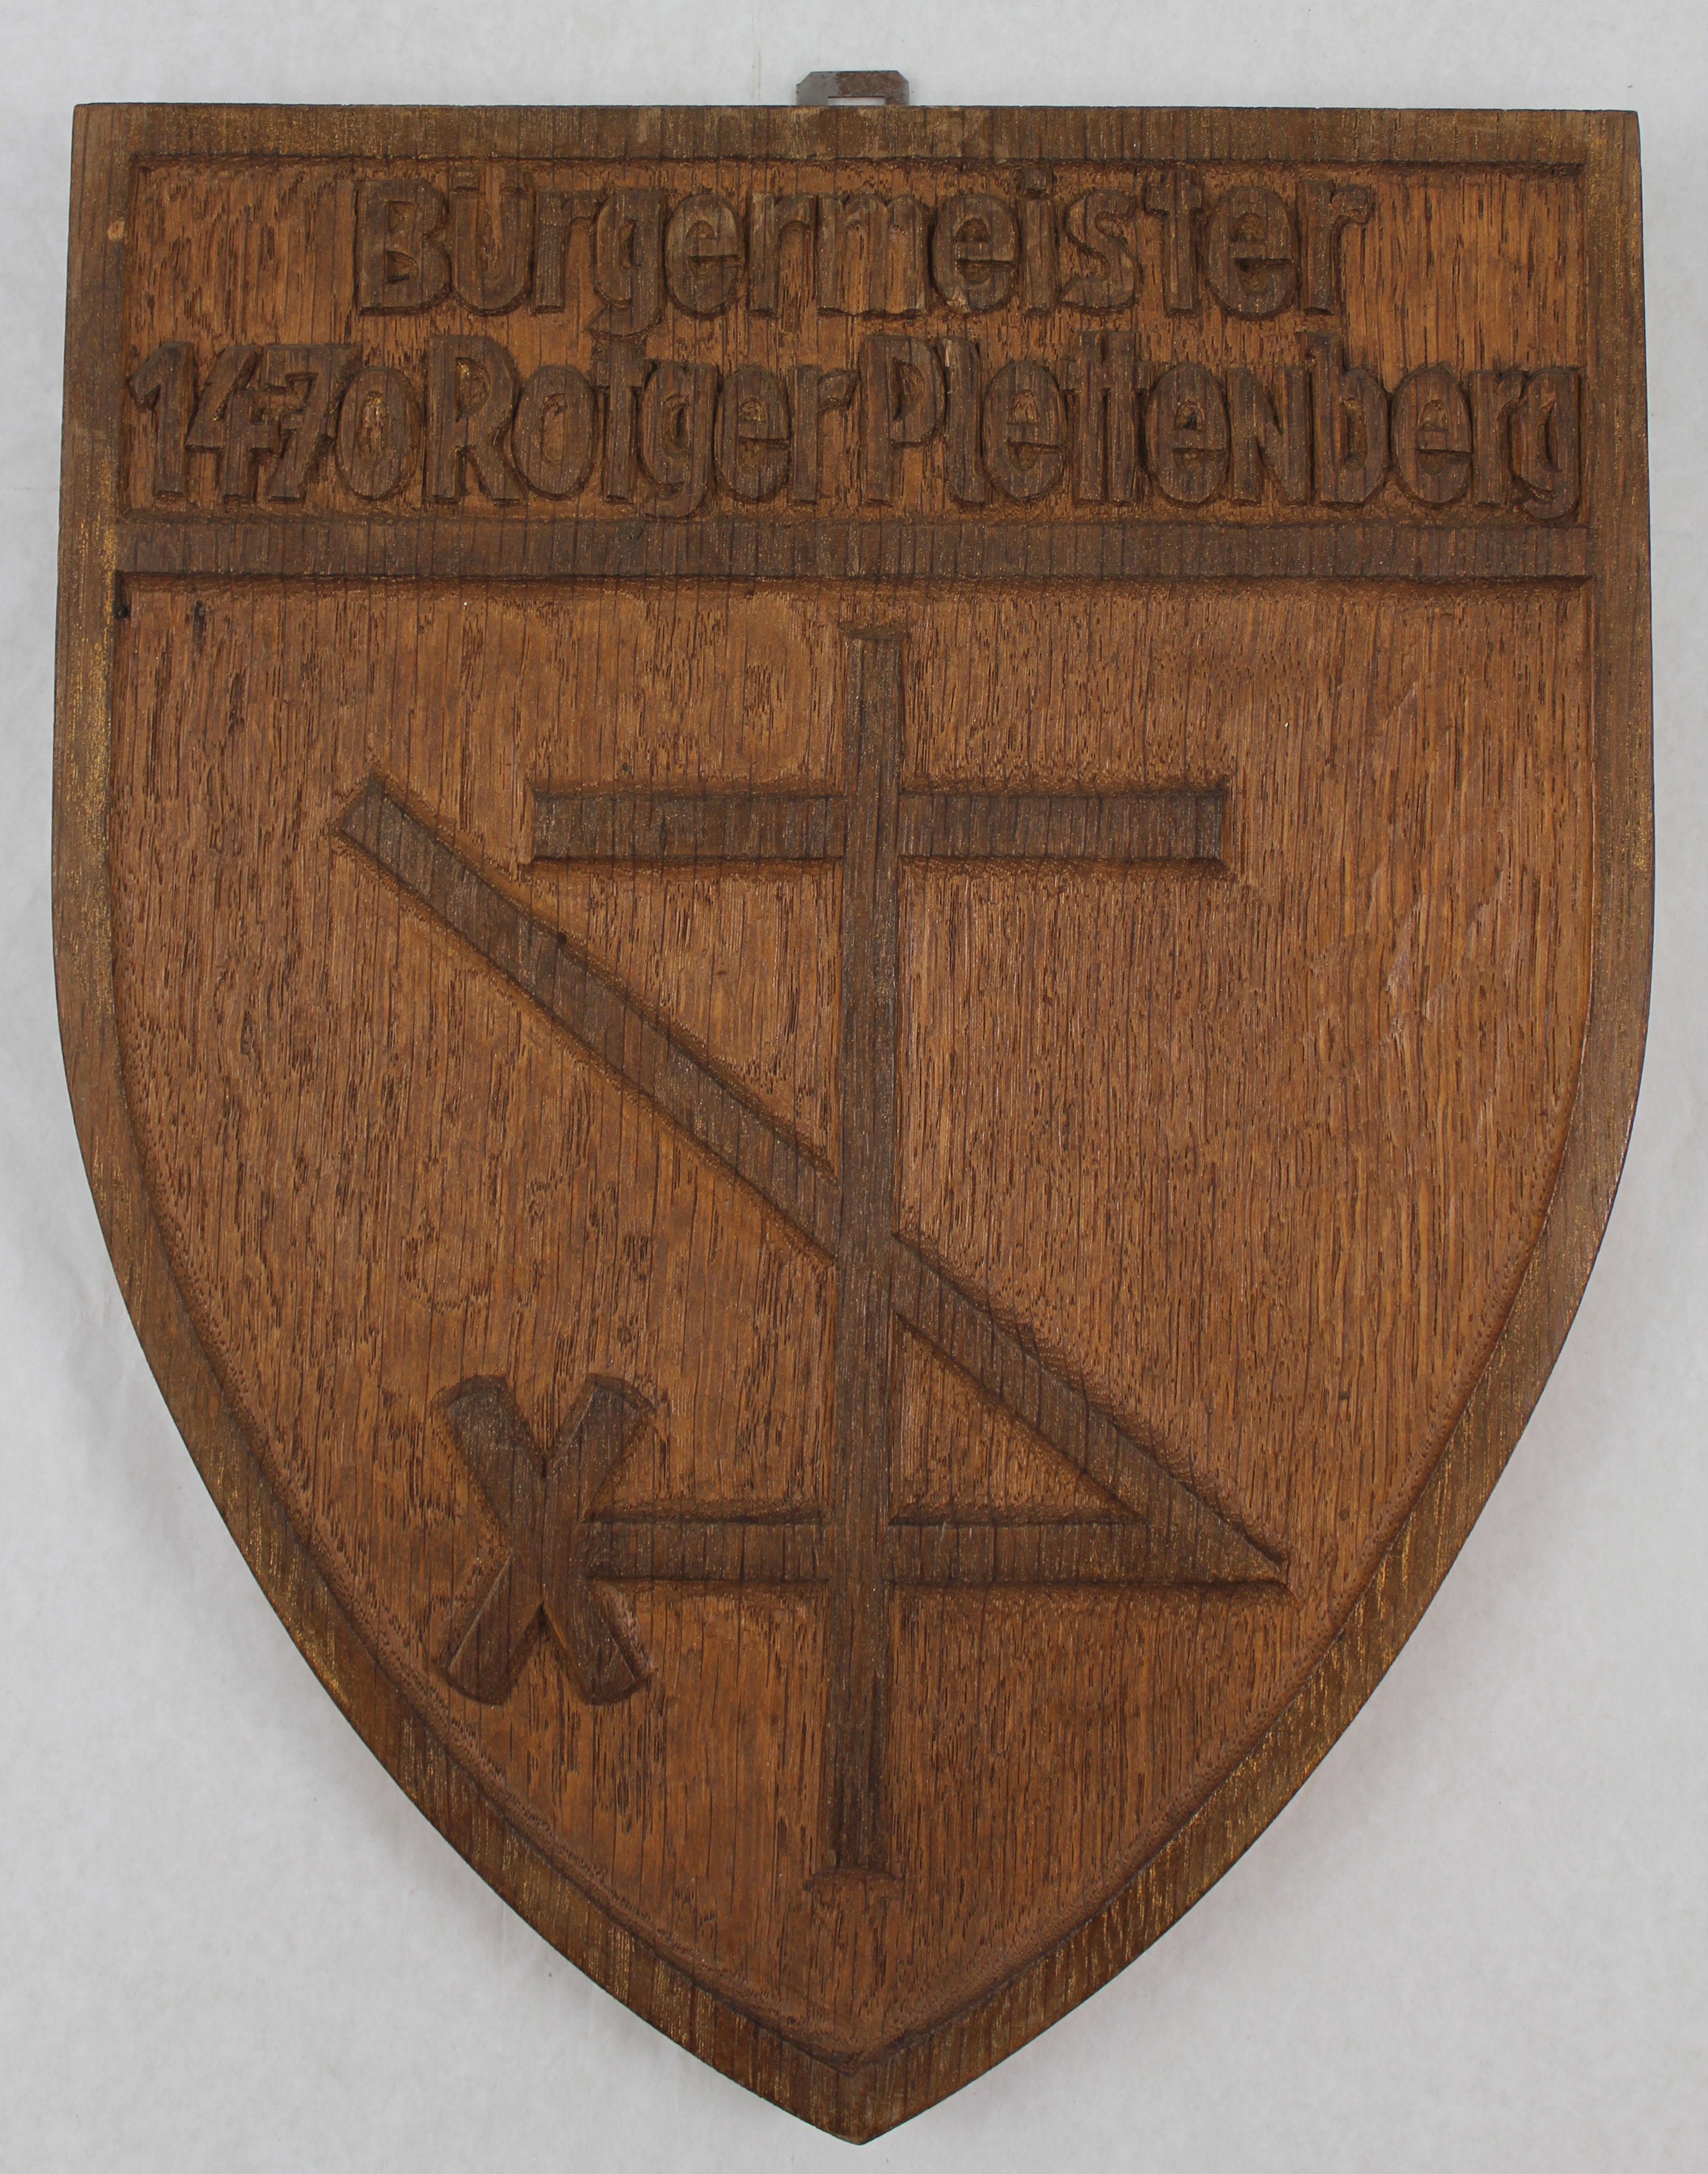 Wappenschild & Hölzernes Wappen mit Hausmarke, Rötger Plettenberg 1417 (Hellweg-Museum Unna CC BY-NC-SA)